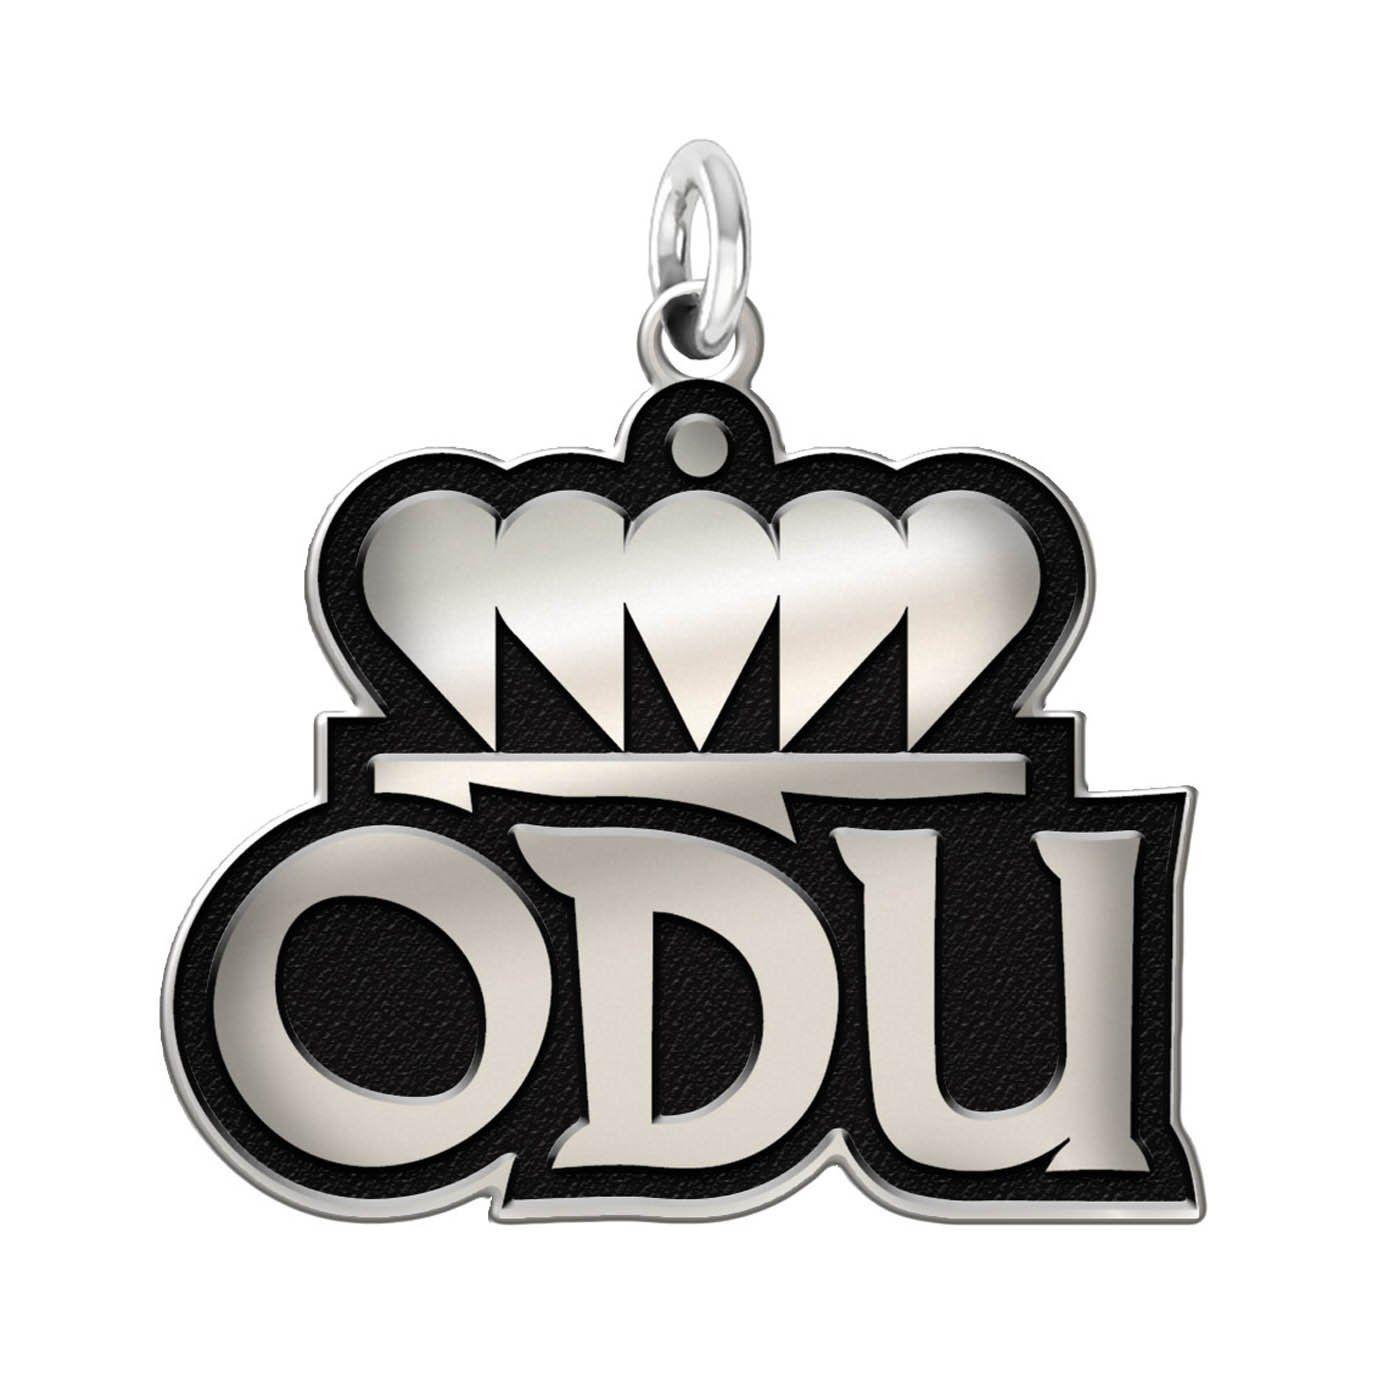 ODU Logo - Amazon.com: Old Dominion Monarchs ODU 1/2